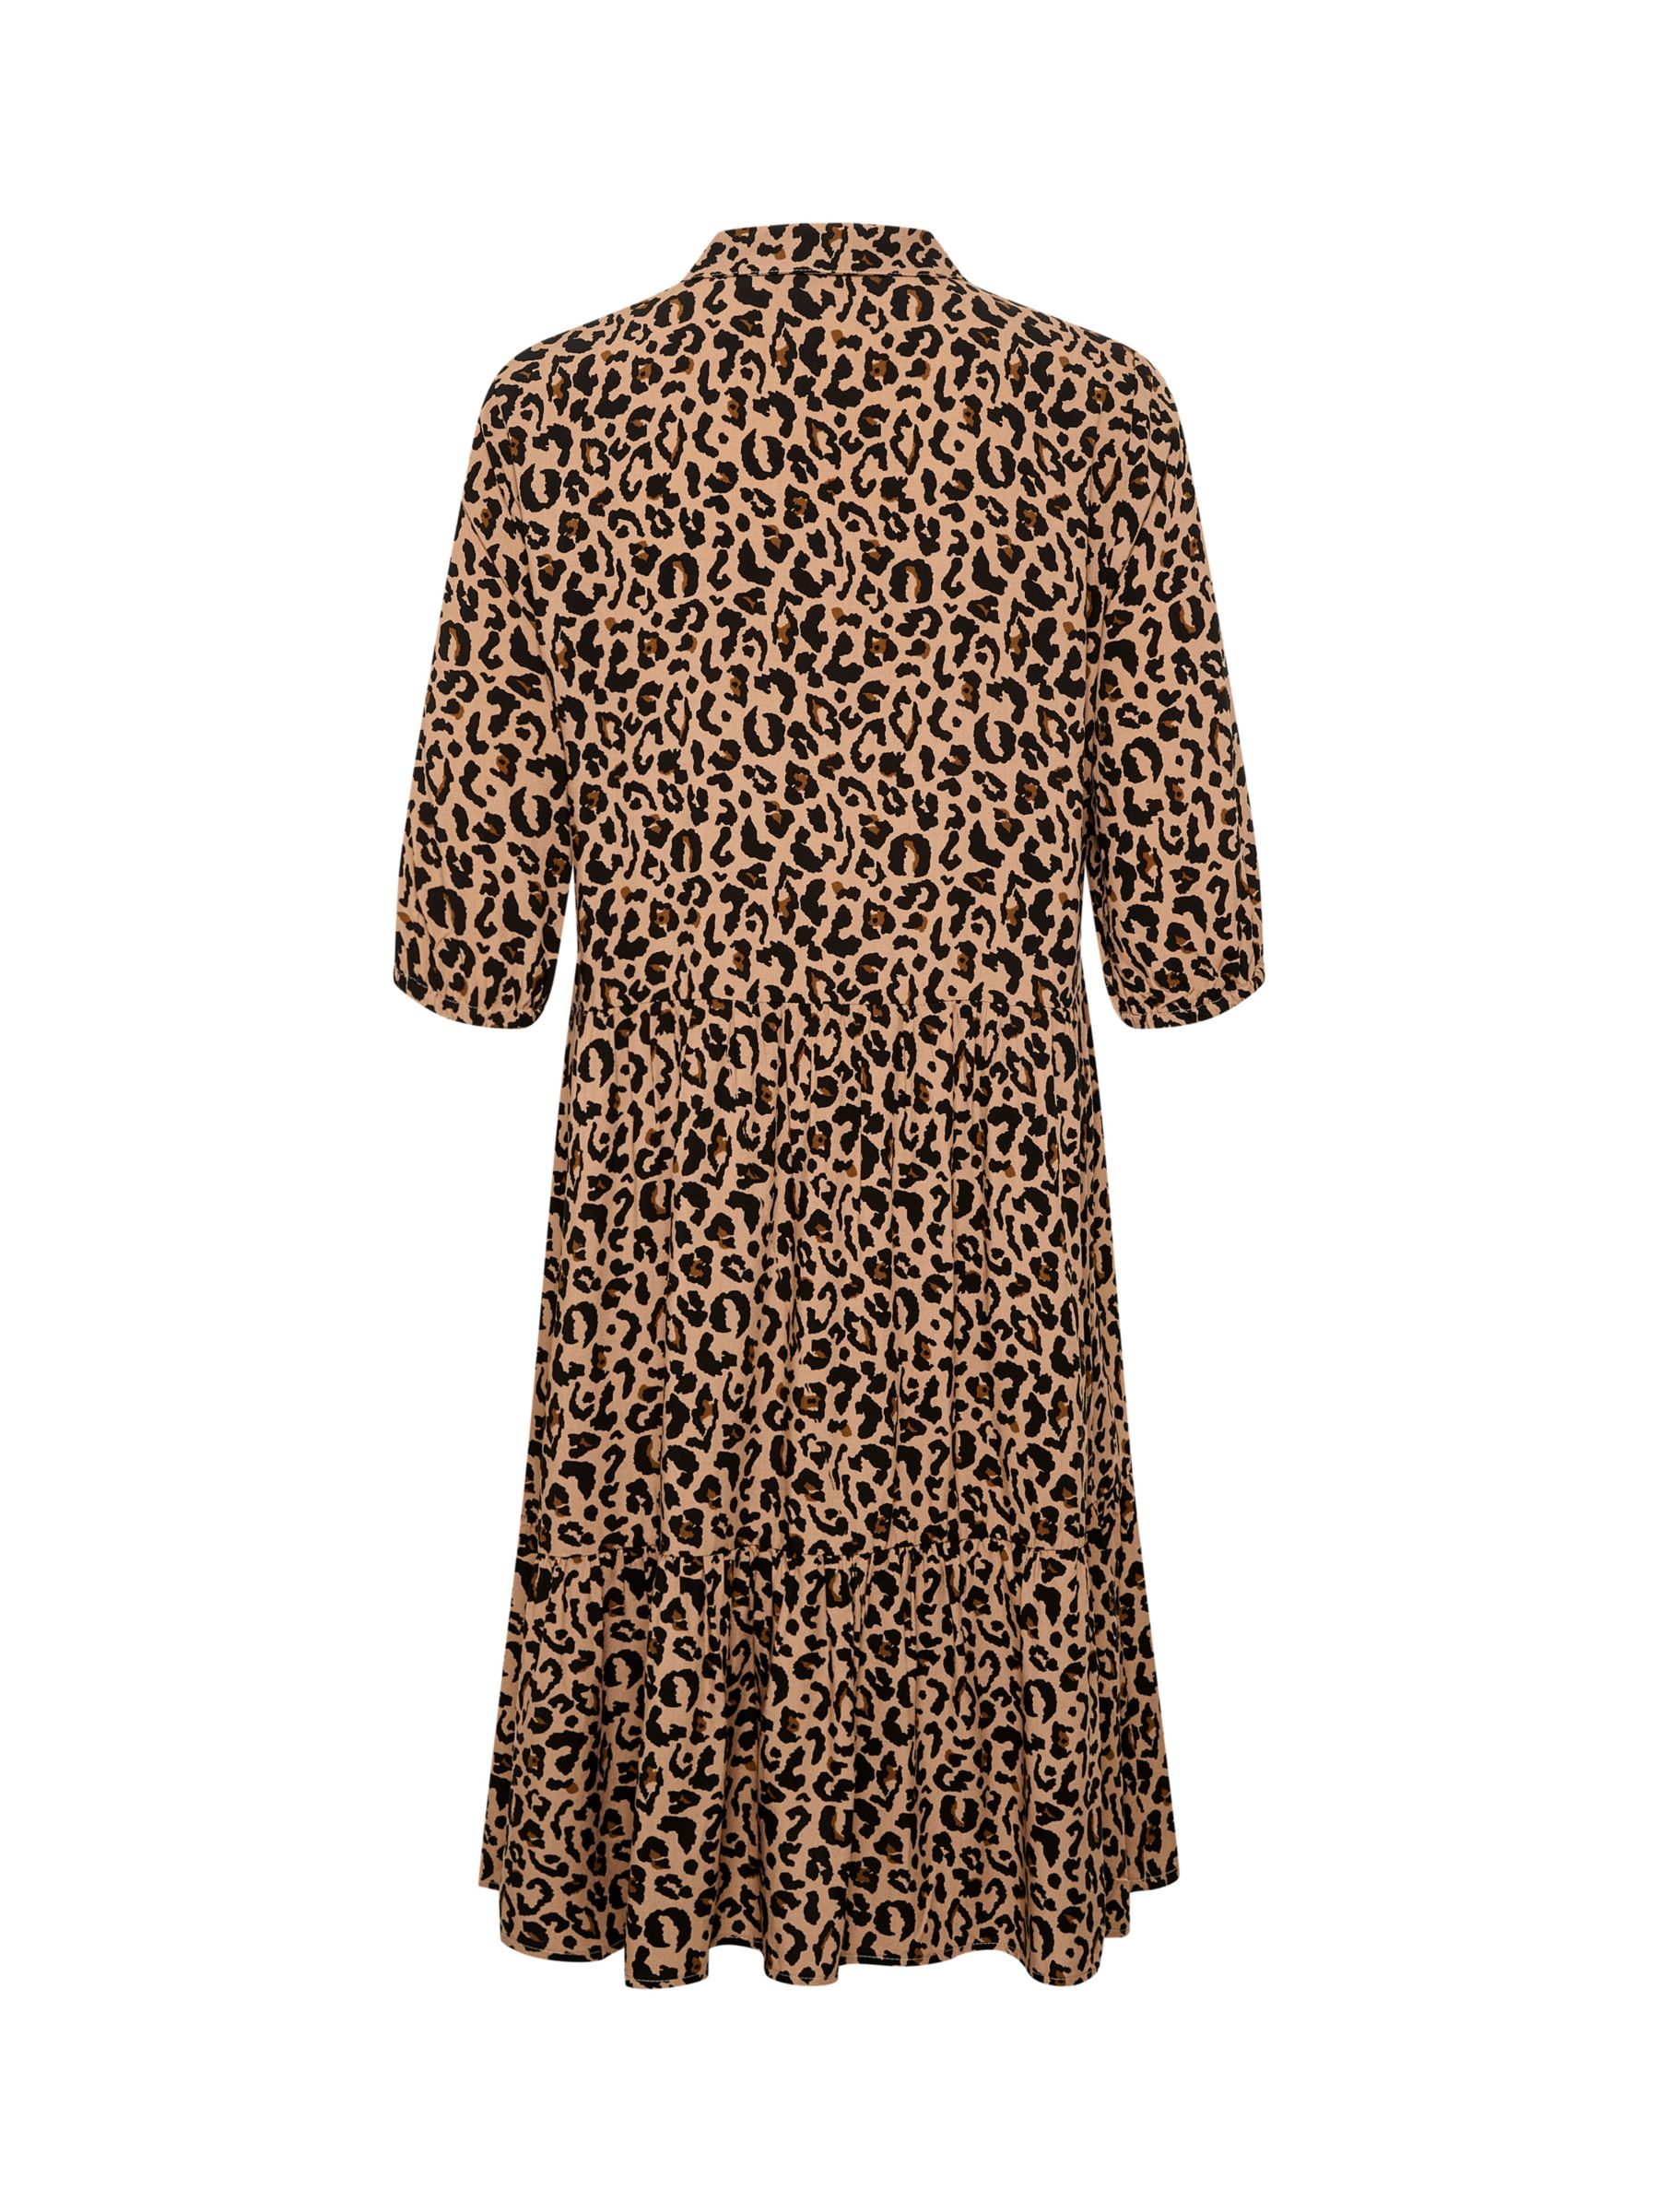 Saint Tropez Ueda 3/4 Sleeve Shirt Dress, Brown/Multi, XS